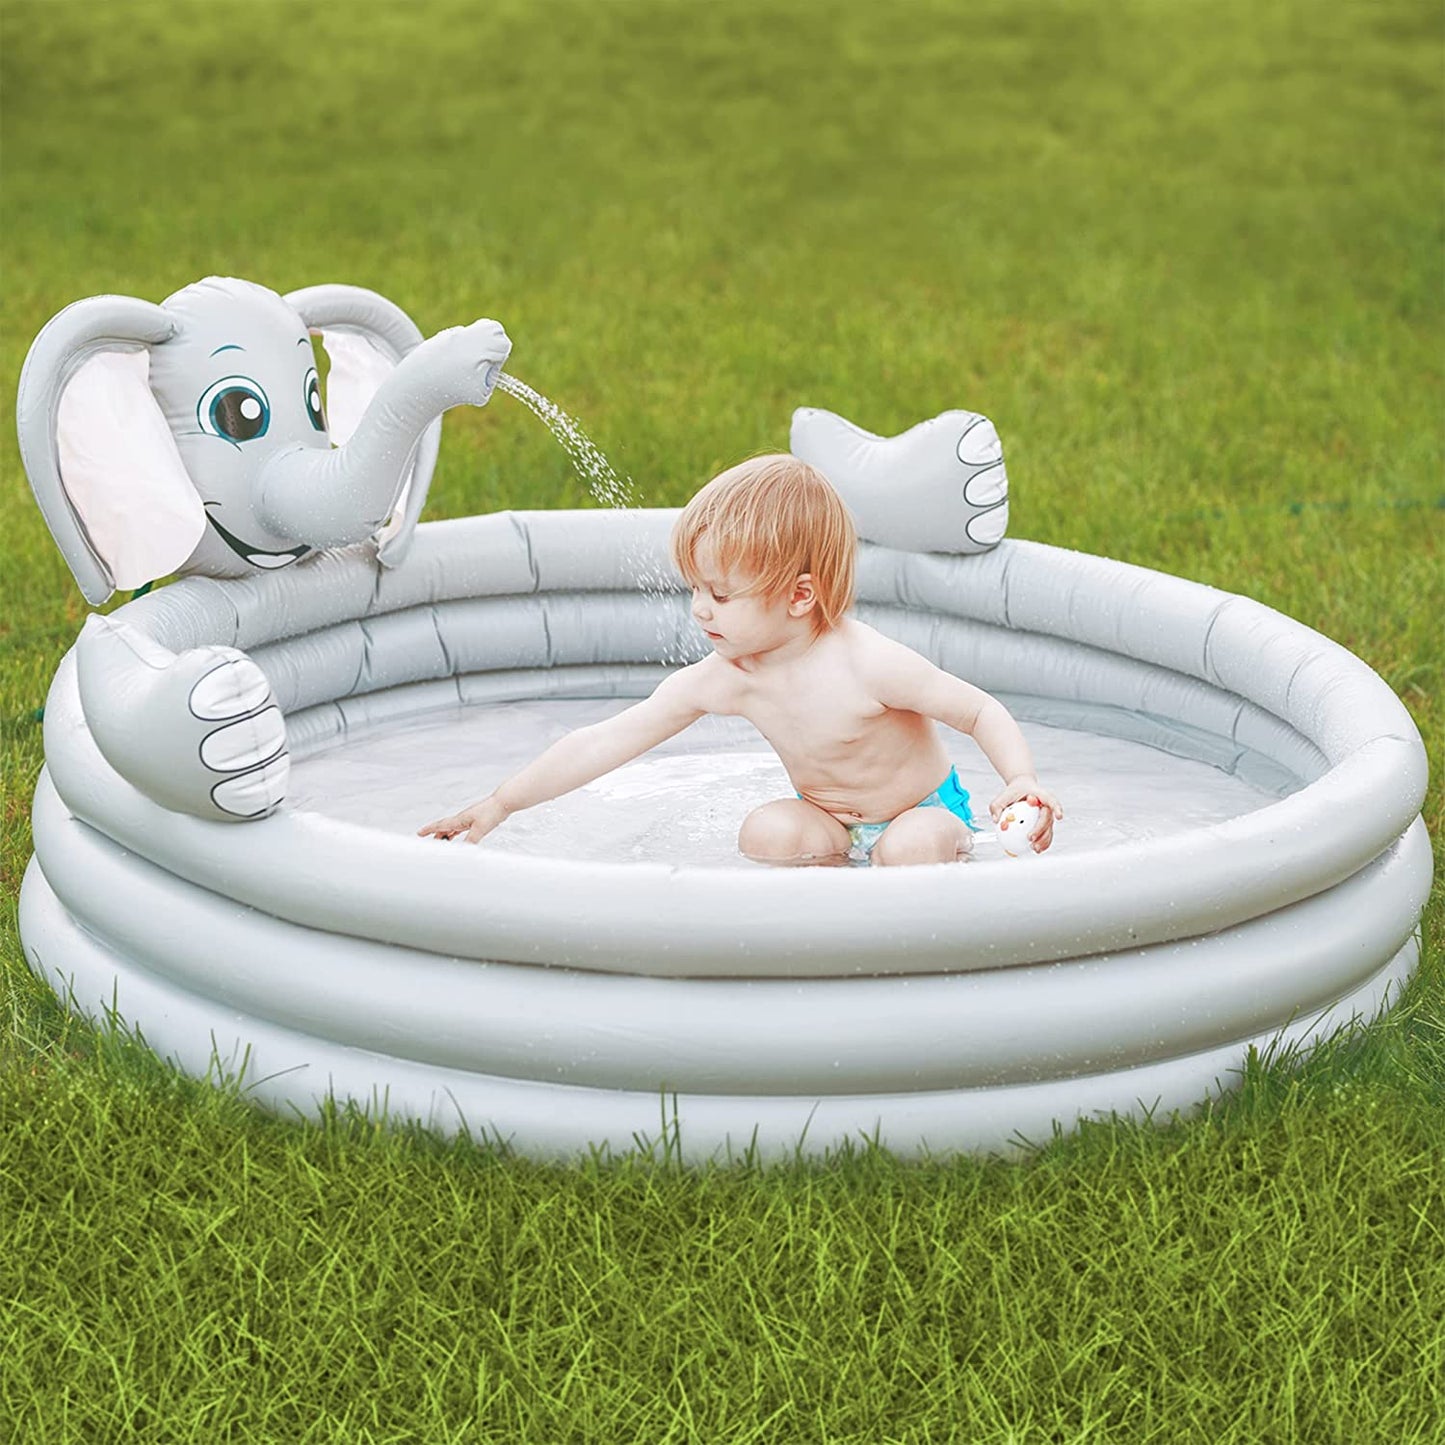 Inflatable Elephant Kiddie Pool